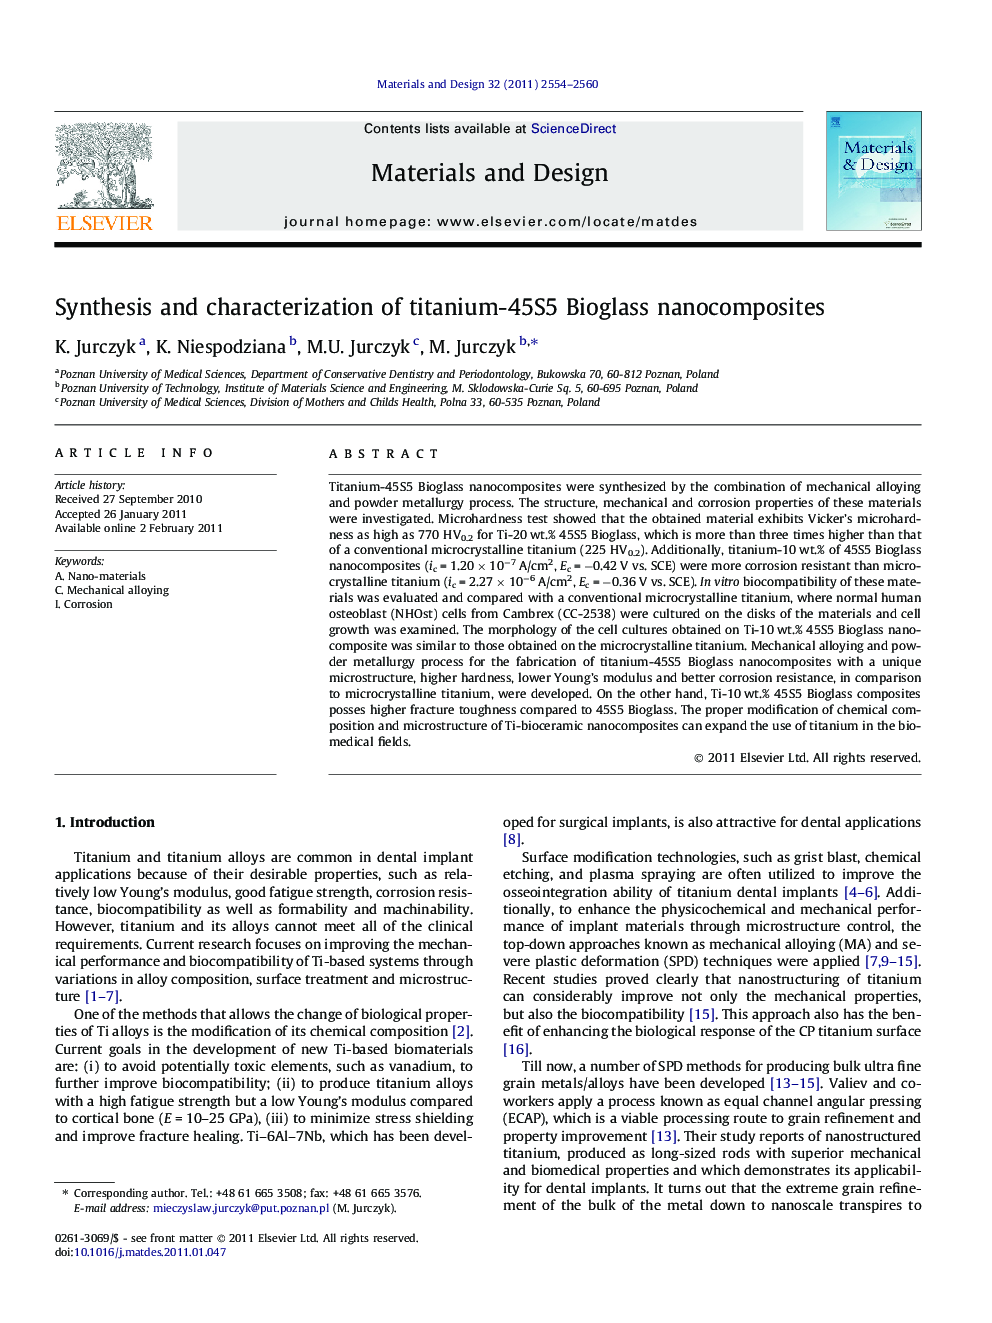 Synthesis and characterization of titanium-45S5 Bioglass nanocomposites